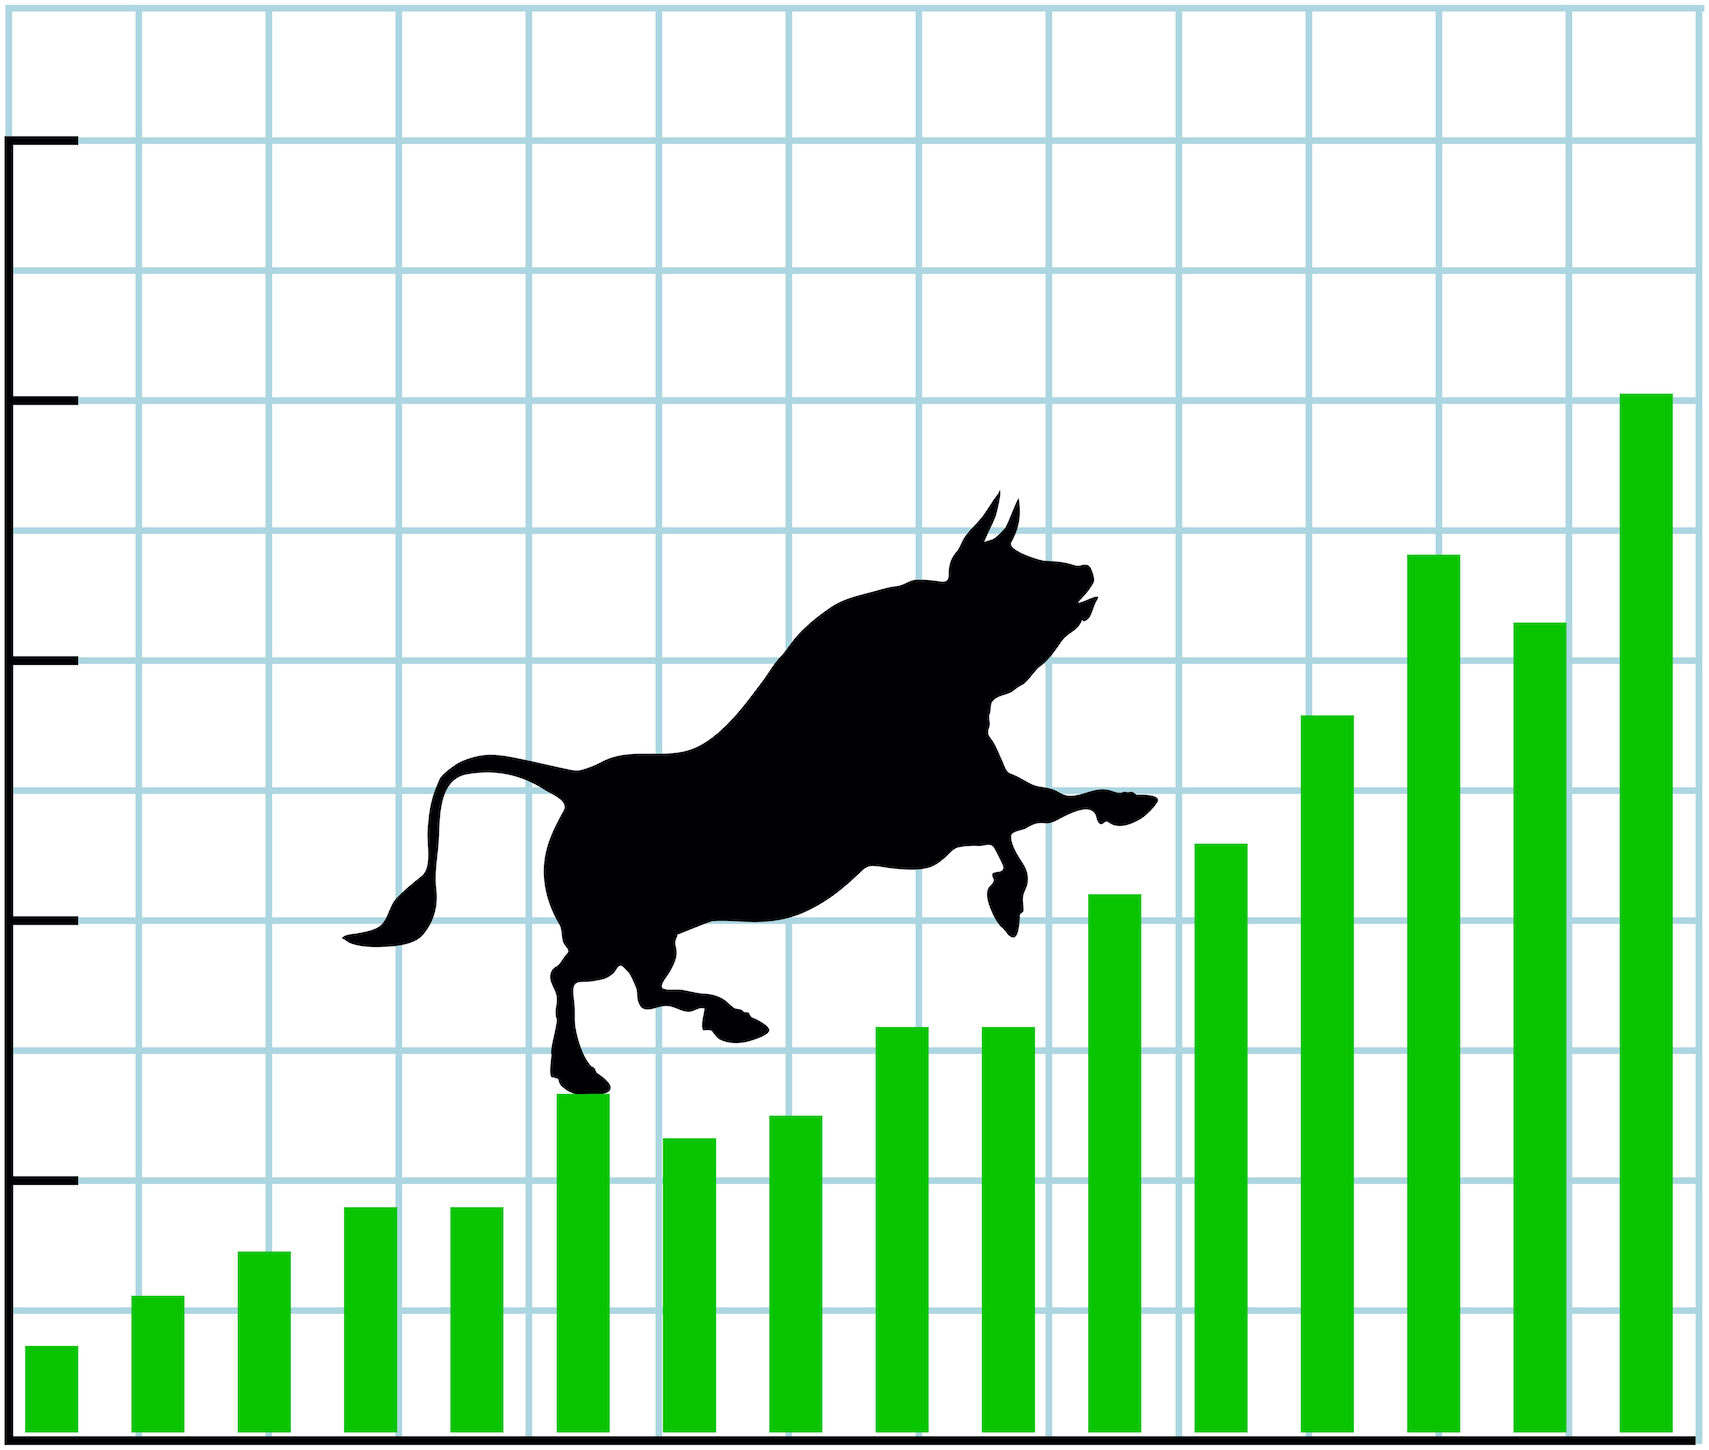 Up bull market rise bullish stock chart graph Financial Independence Hub